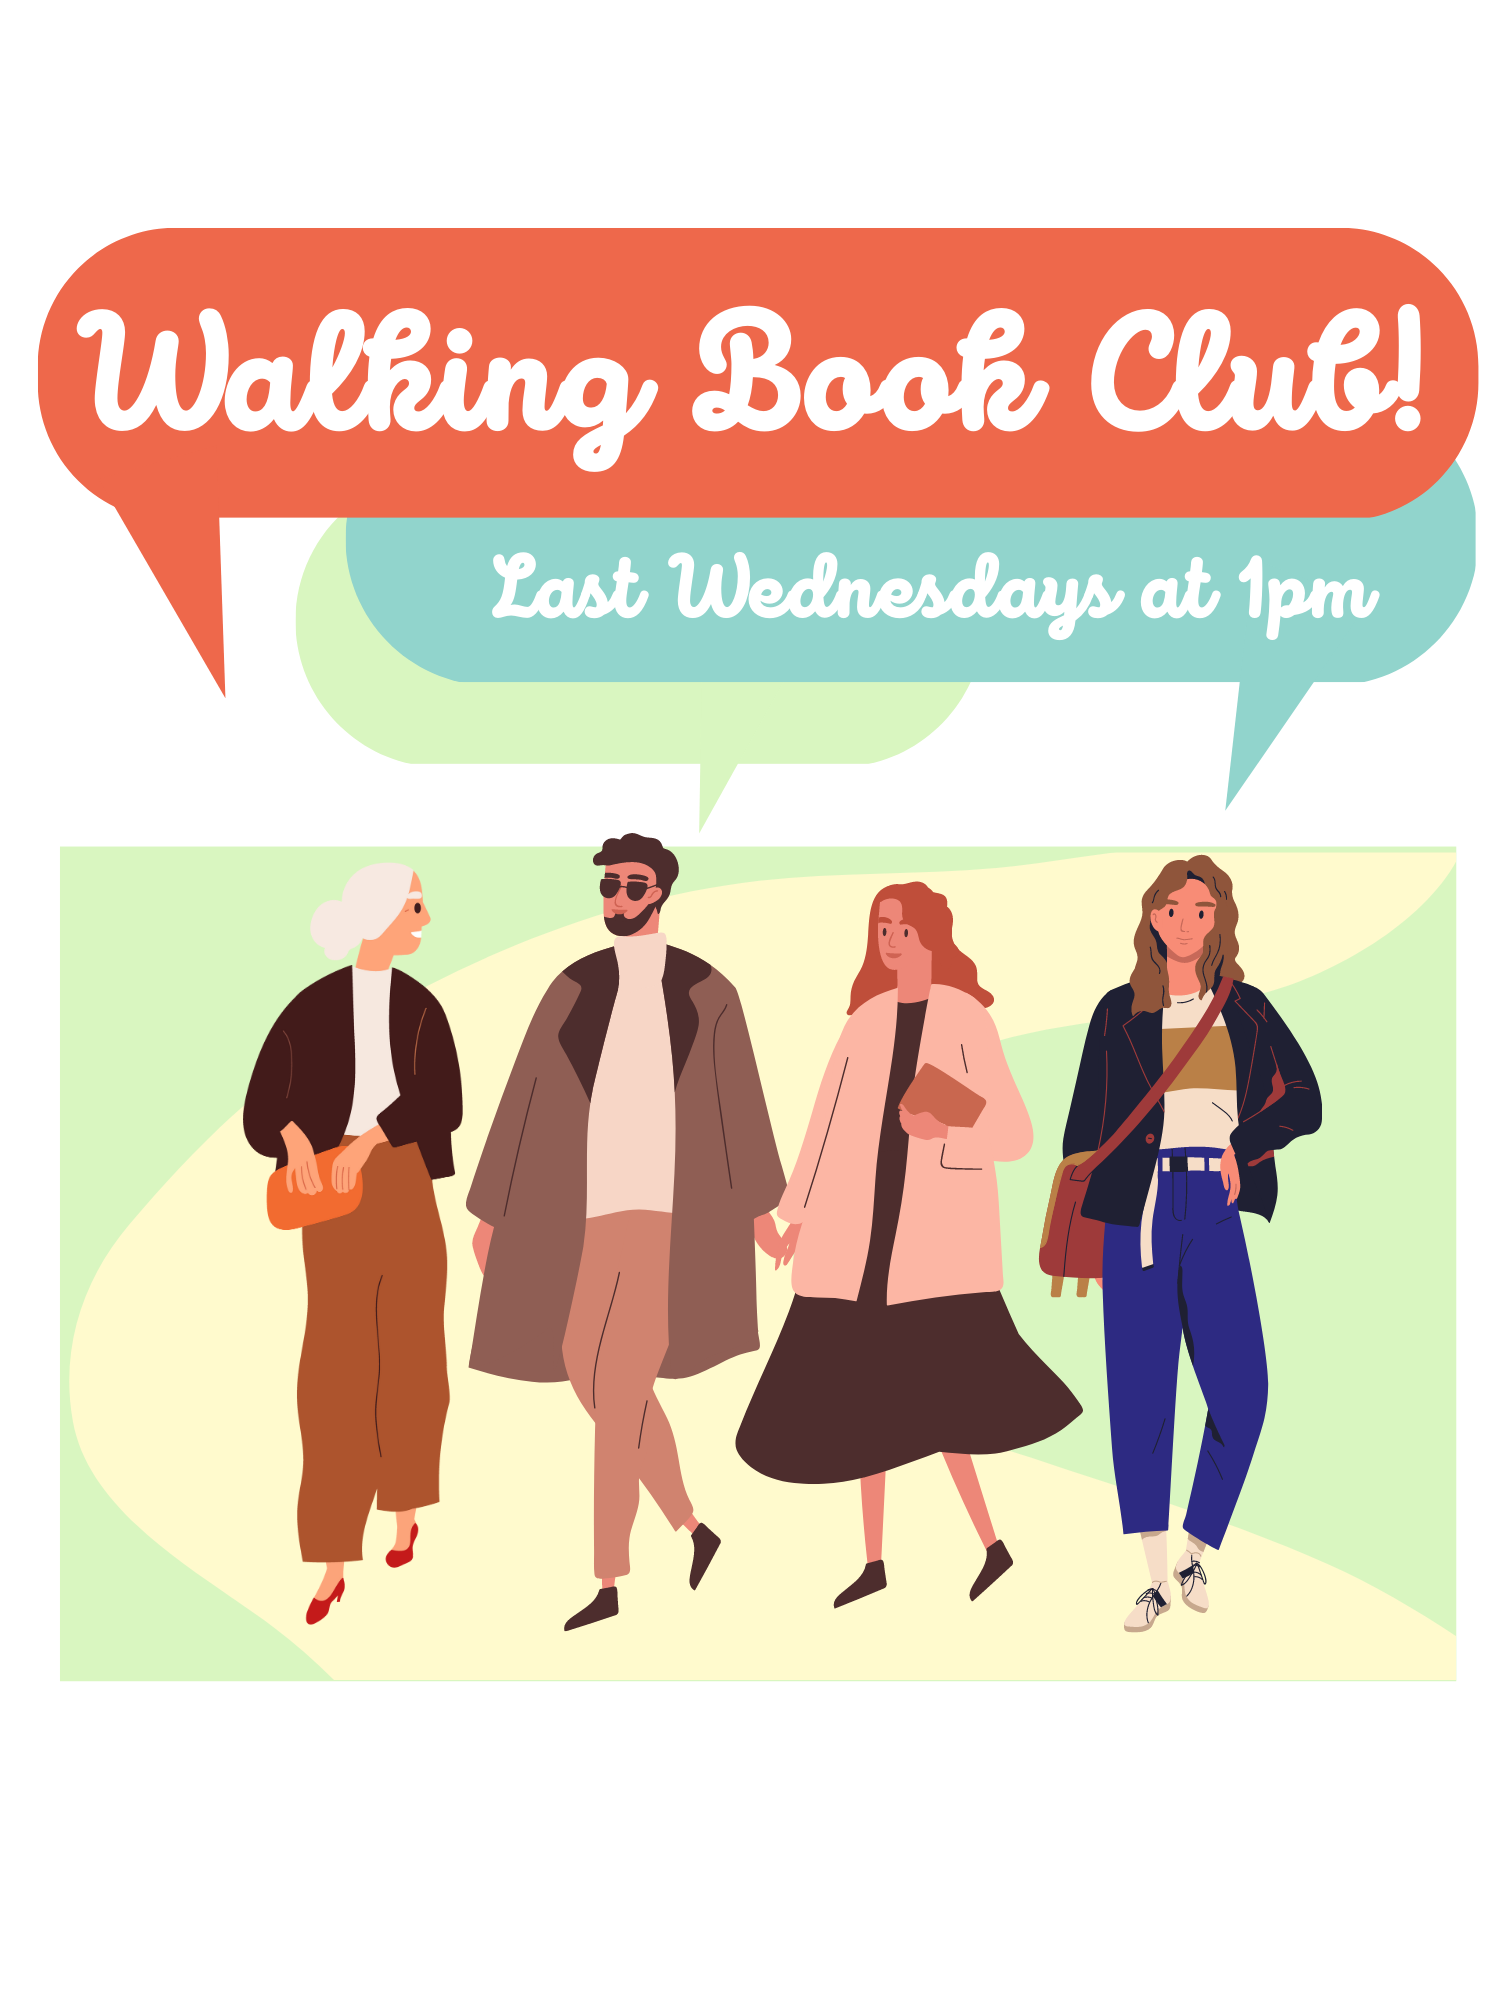 Walking Book Club last wednesdays at 1